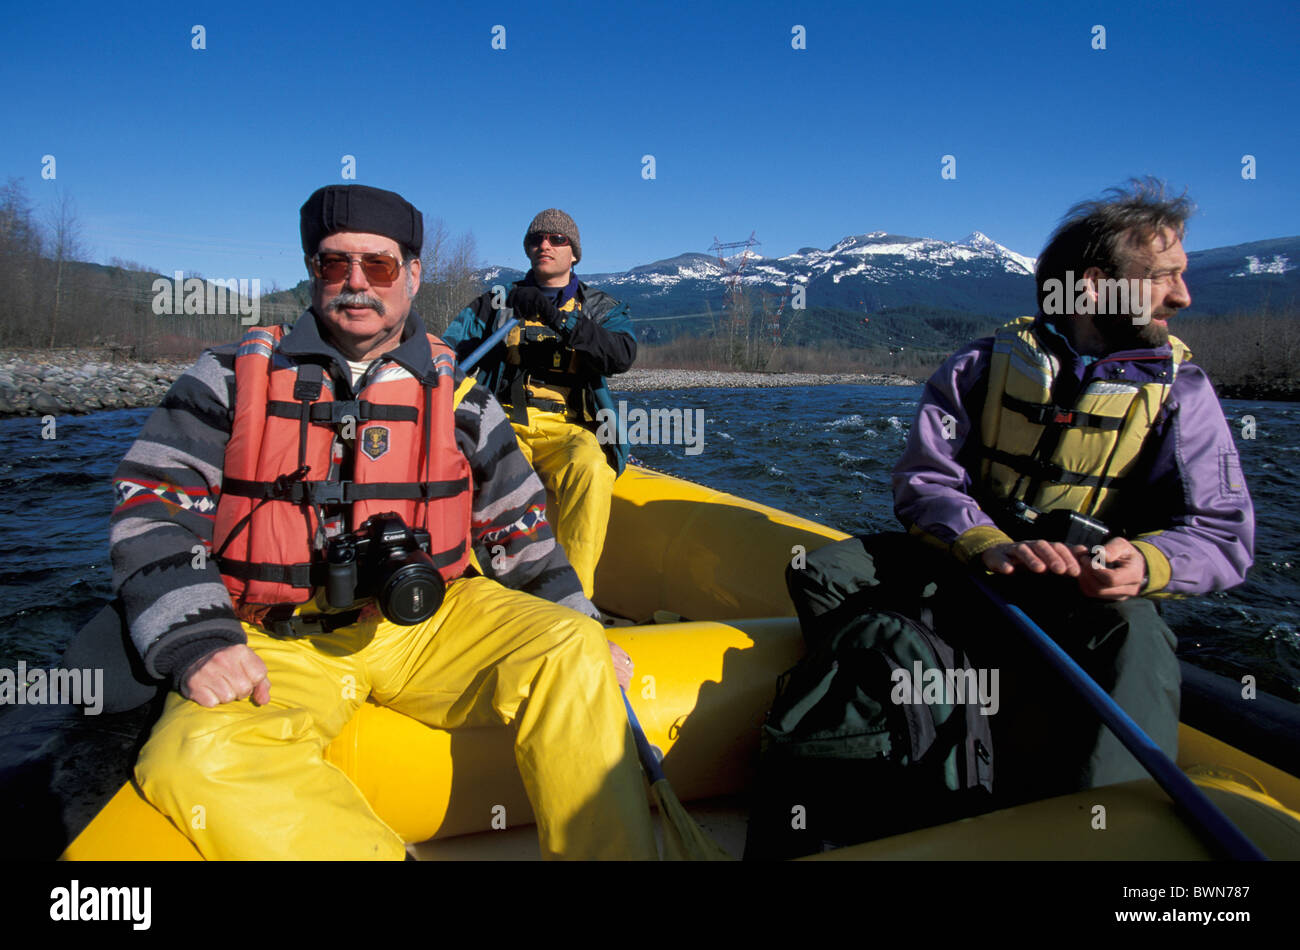 Canada North America America Rafting Squamish River Squamish British Columbia Boat dinghy photographer men Stock Photo